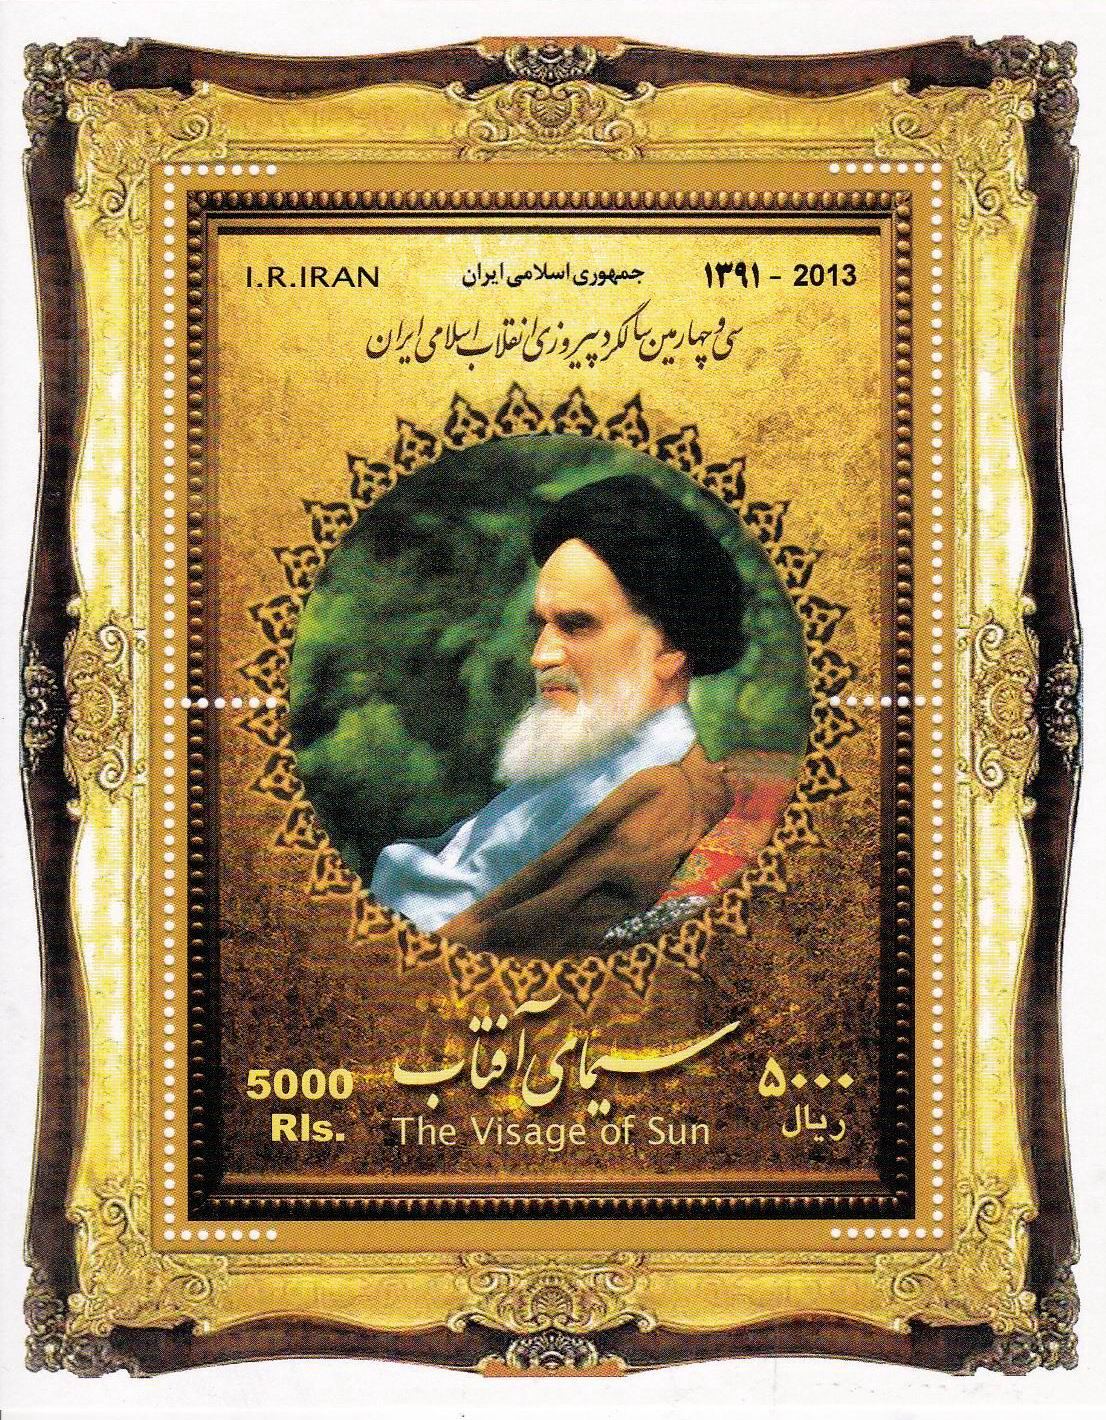 Iran 1976 Stamps Pehlavi Dynasty Mohammad Reza Shah Pehlavi MNH - Click Image to Close